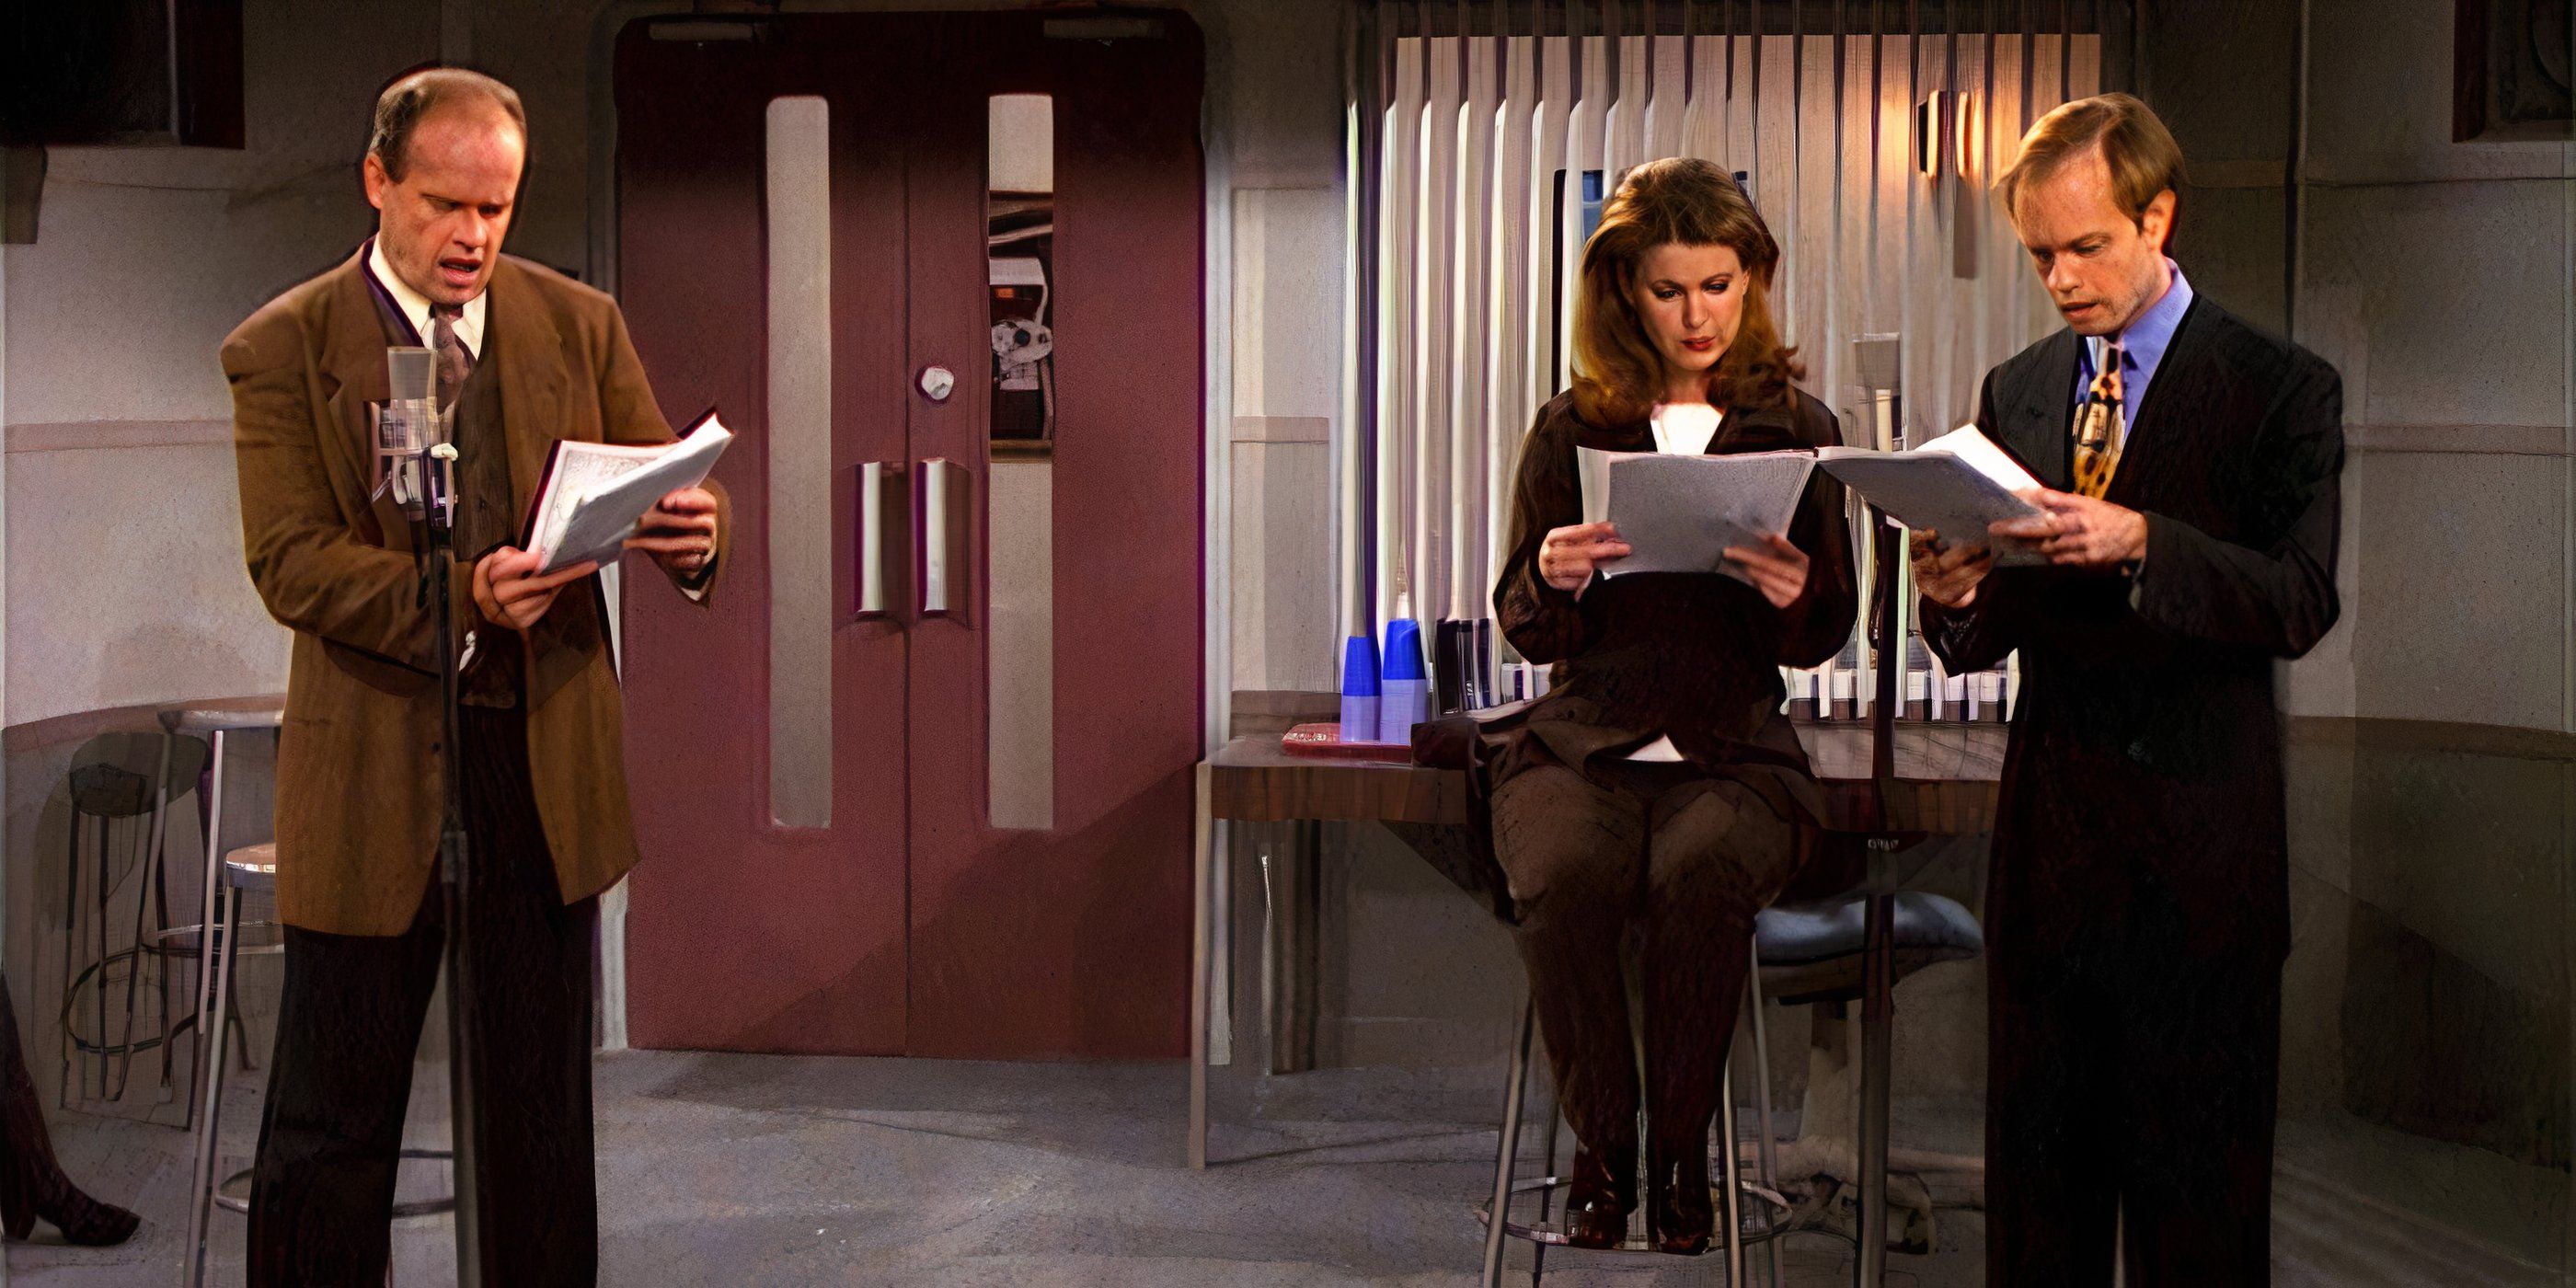 Niles, Roz and Frasier perform a radio drama in 'Frasier'